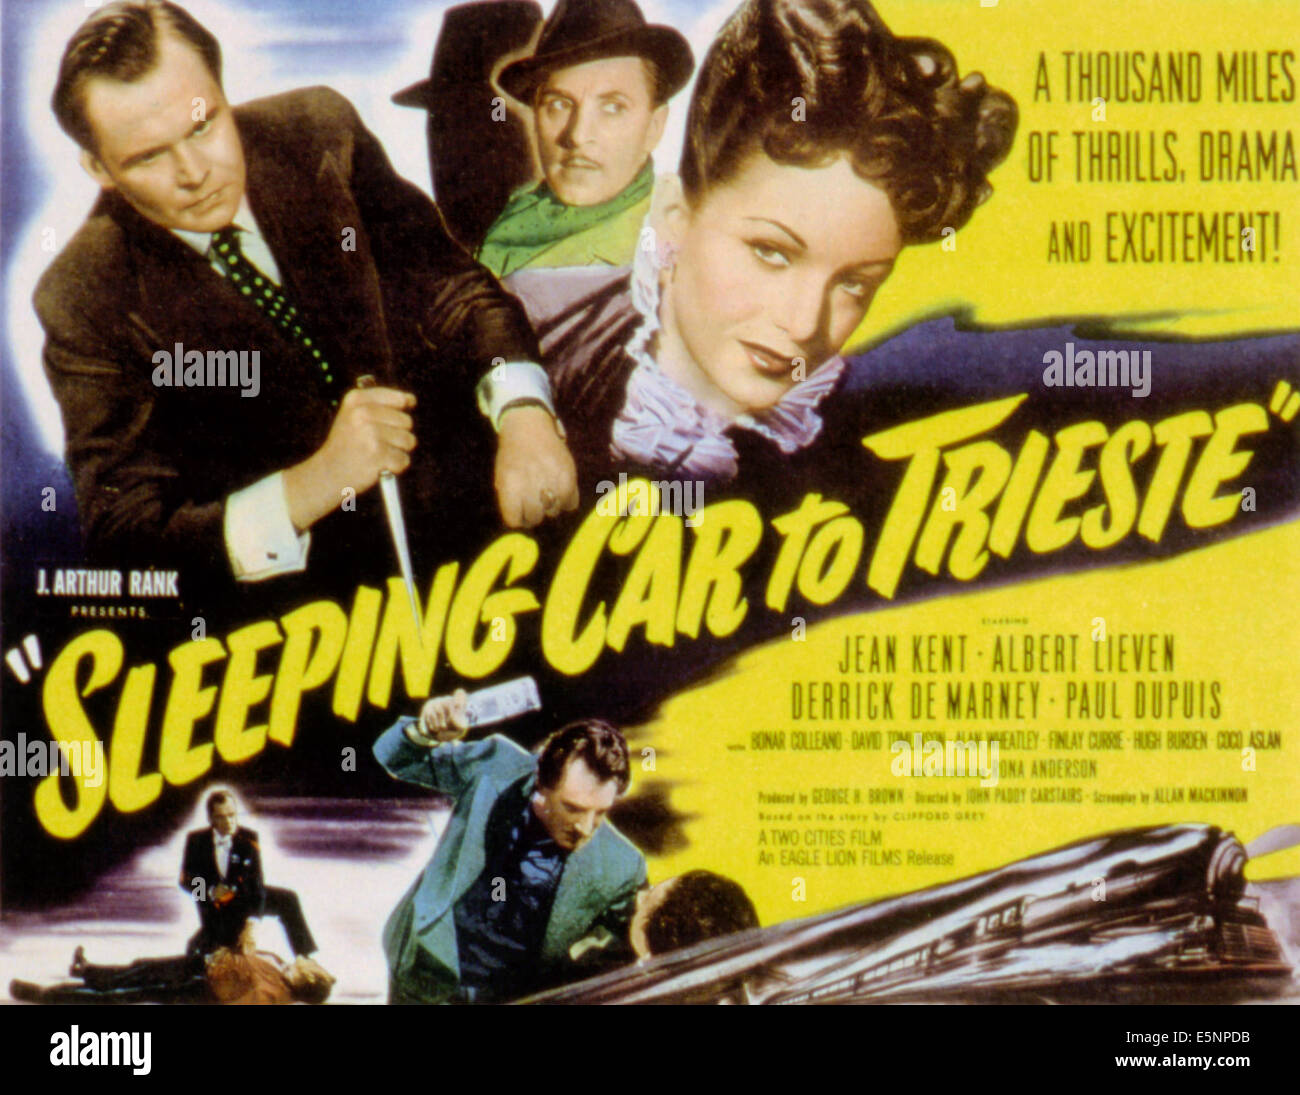 SLEEPING CAR TO TRIESTE, Albert Lieven (left), Jean Kent, 1948 Stock Photo